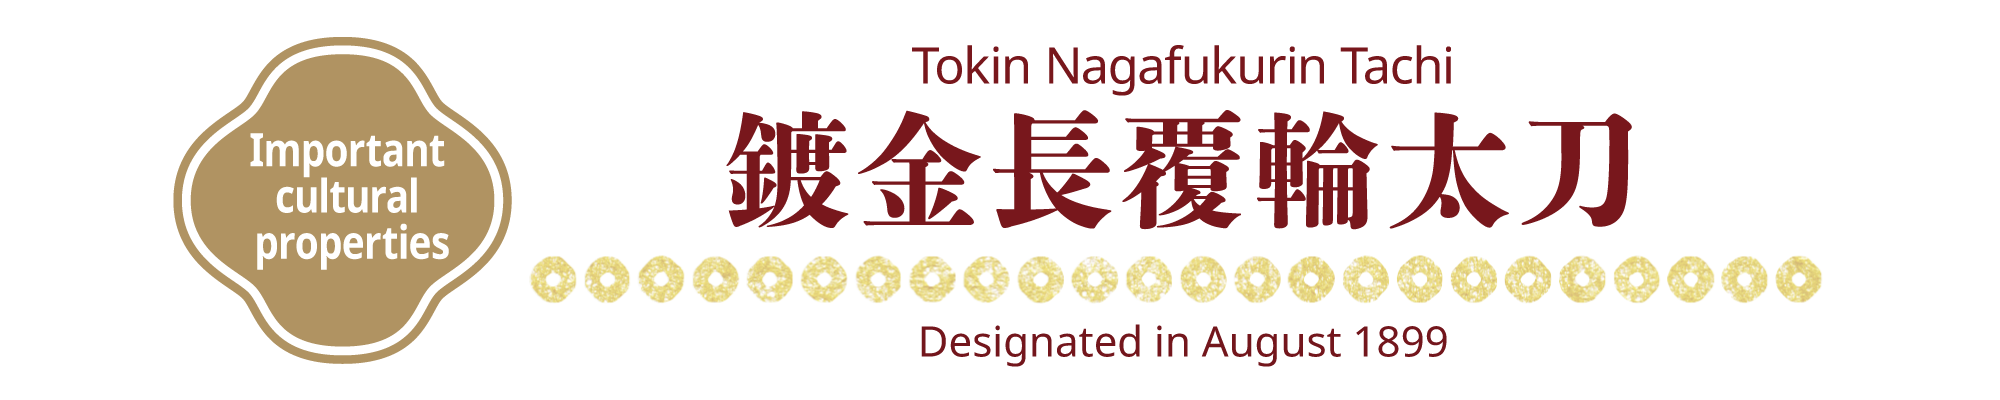 [Important cultural properties] Tokin Nagafukurin Tachi, Designated in August 1899